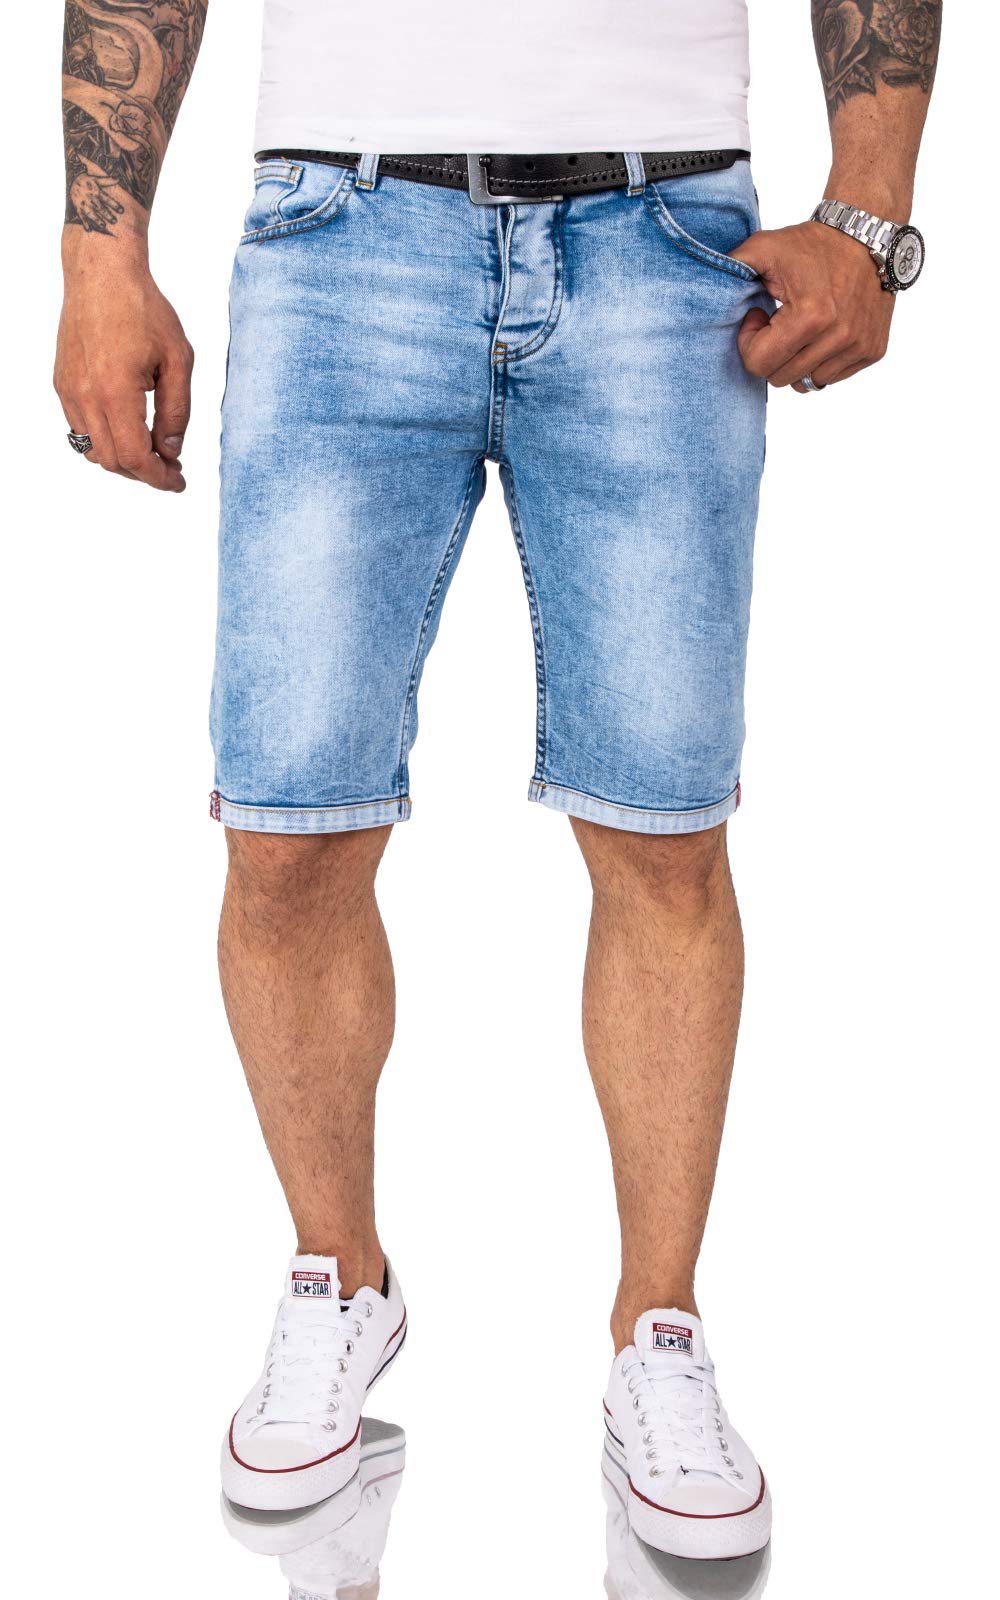 Rock Creek Herren Shorts Jeansshorts Denim Short Kurze Hose Herrenshorts Jeans Sommer Hose Stretch Bermuda Hose RC-2207 Hellblau W31